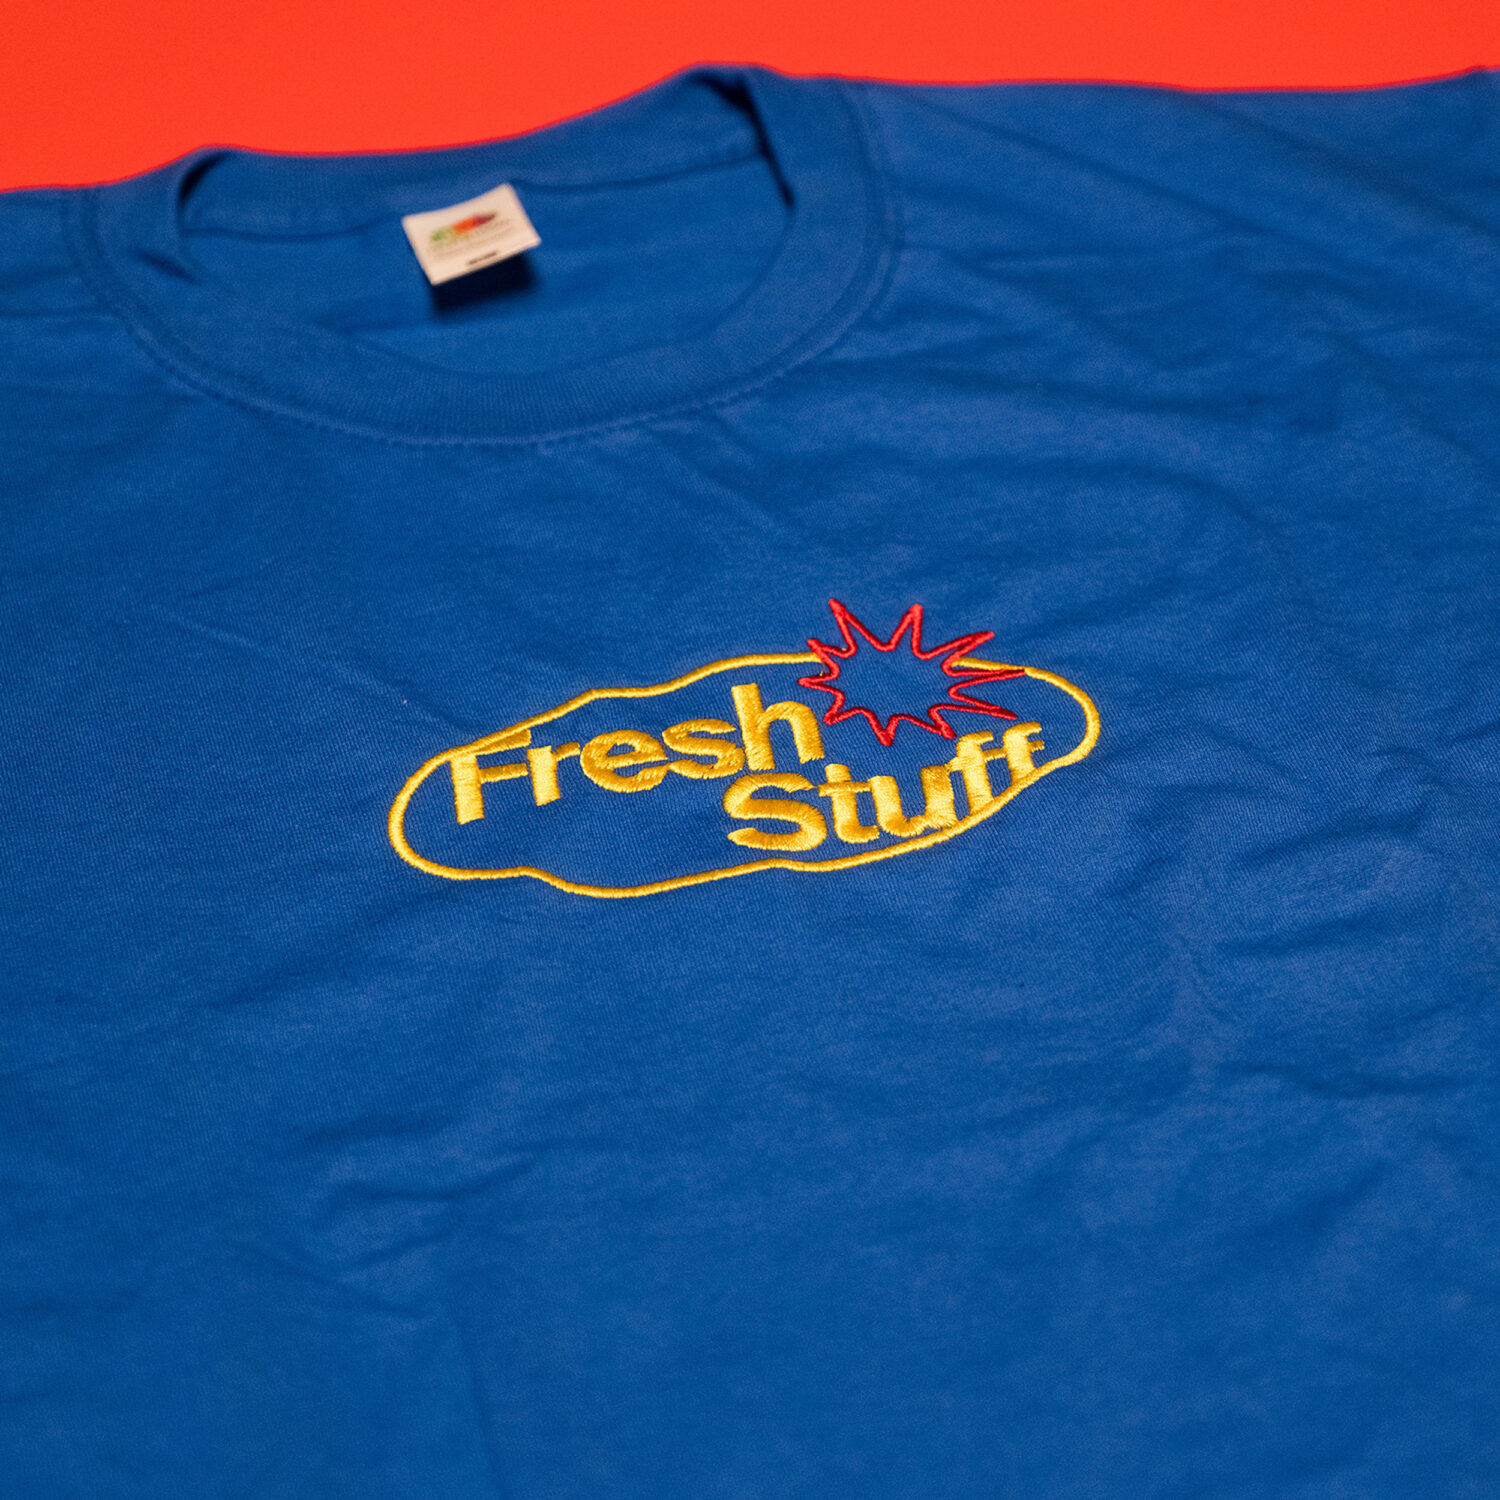 FreshStuff Splat Embroidered Unisex T-Shirt (Blue)